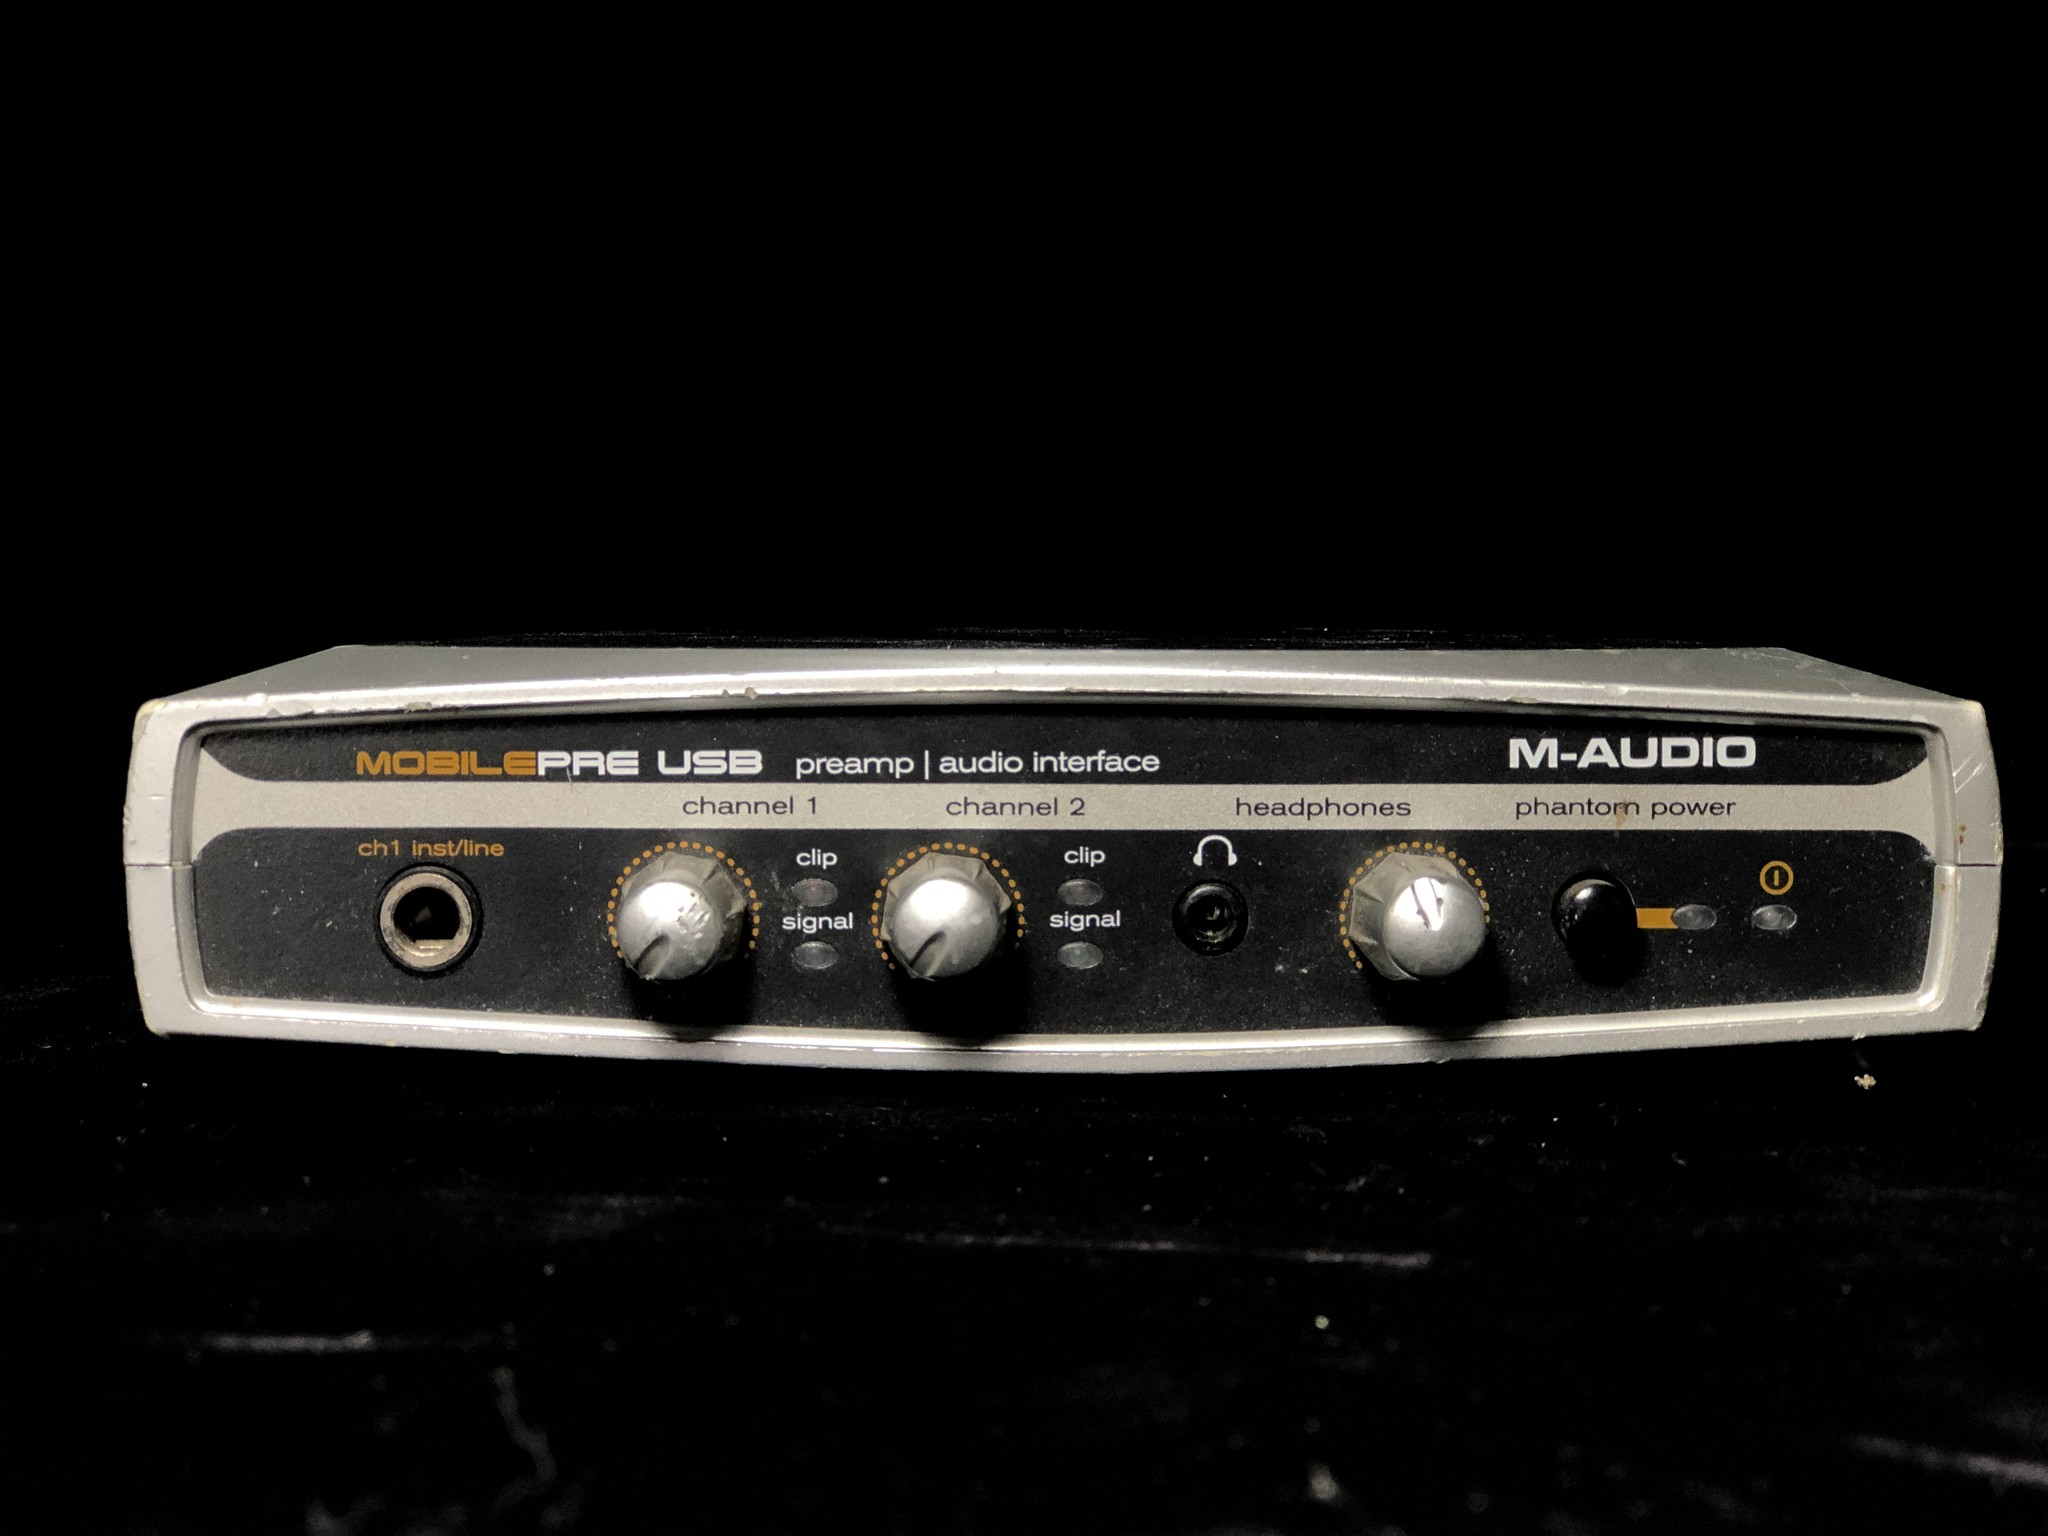 M-Audio 200F MobilePre USB preamp & audio Interface-1